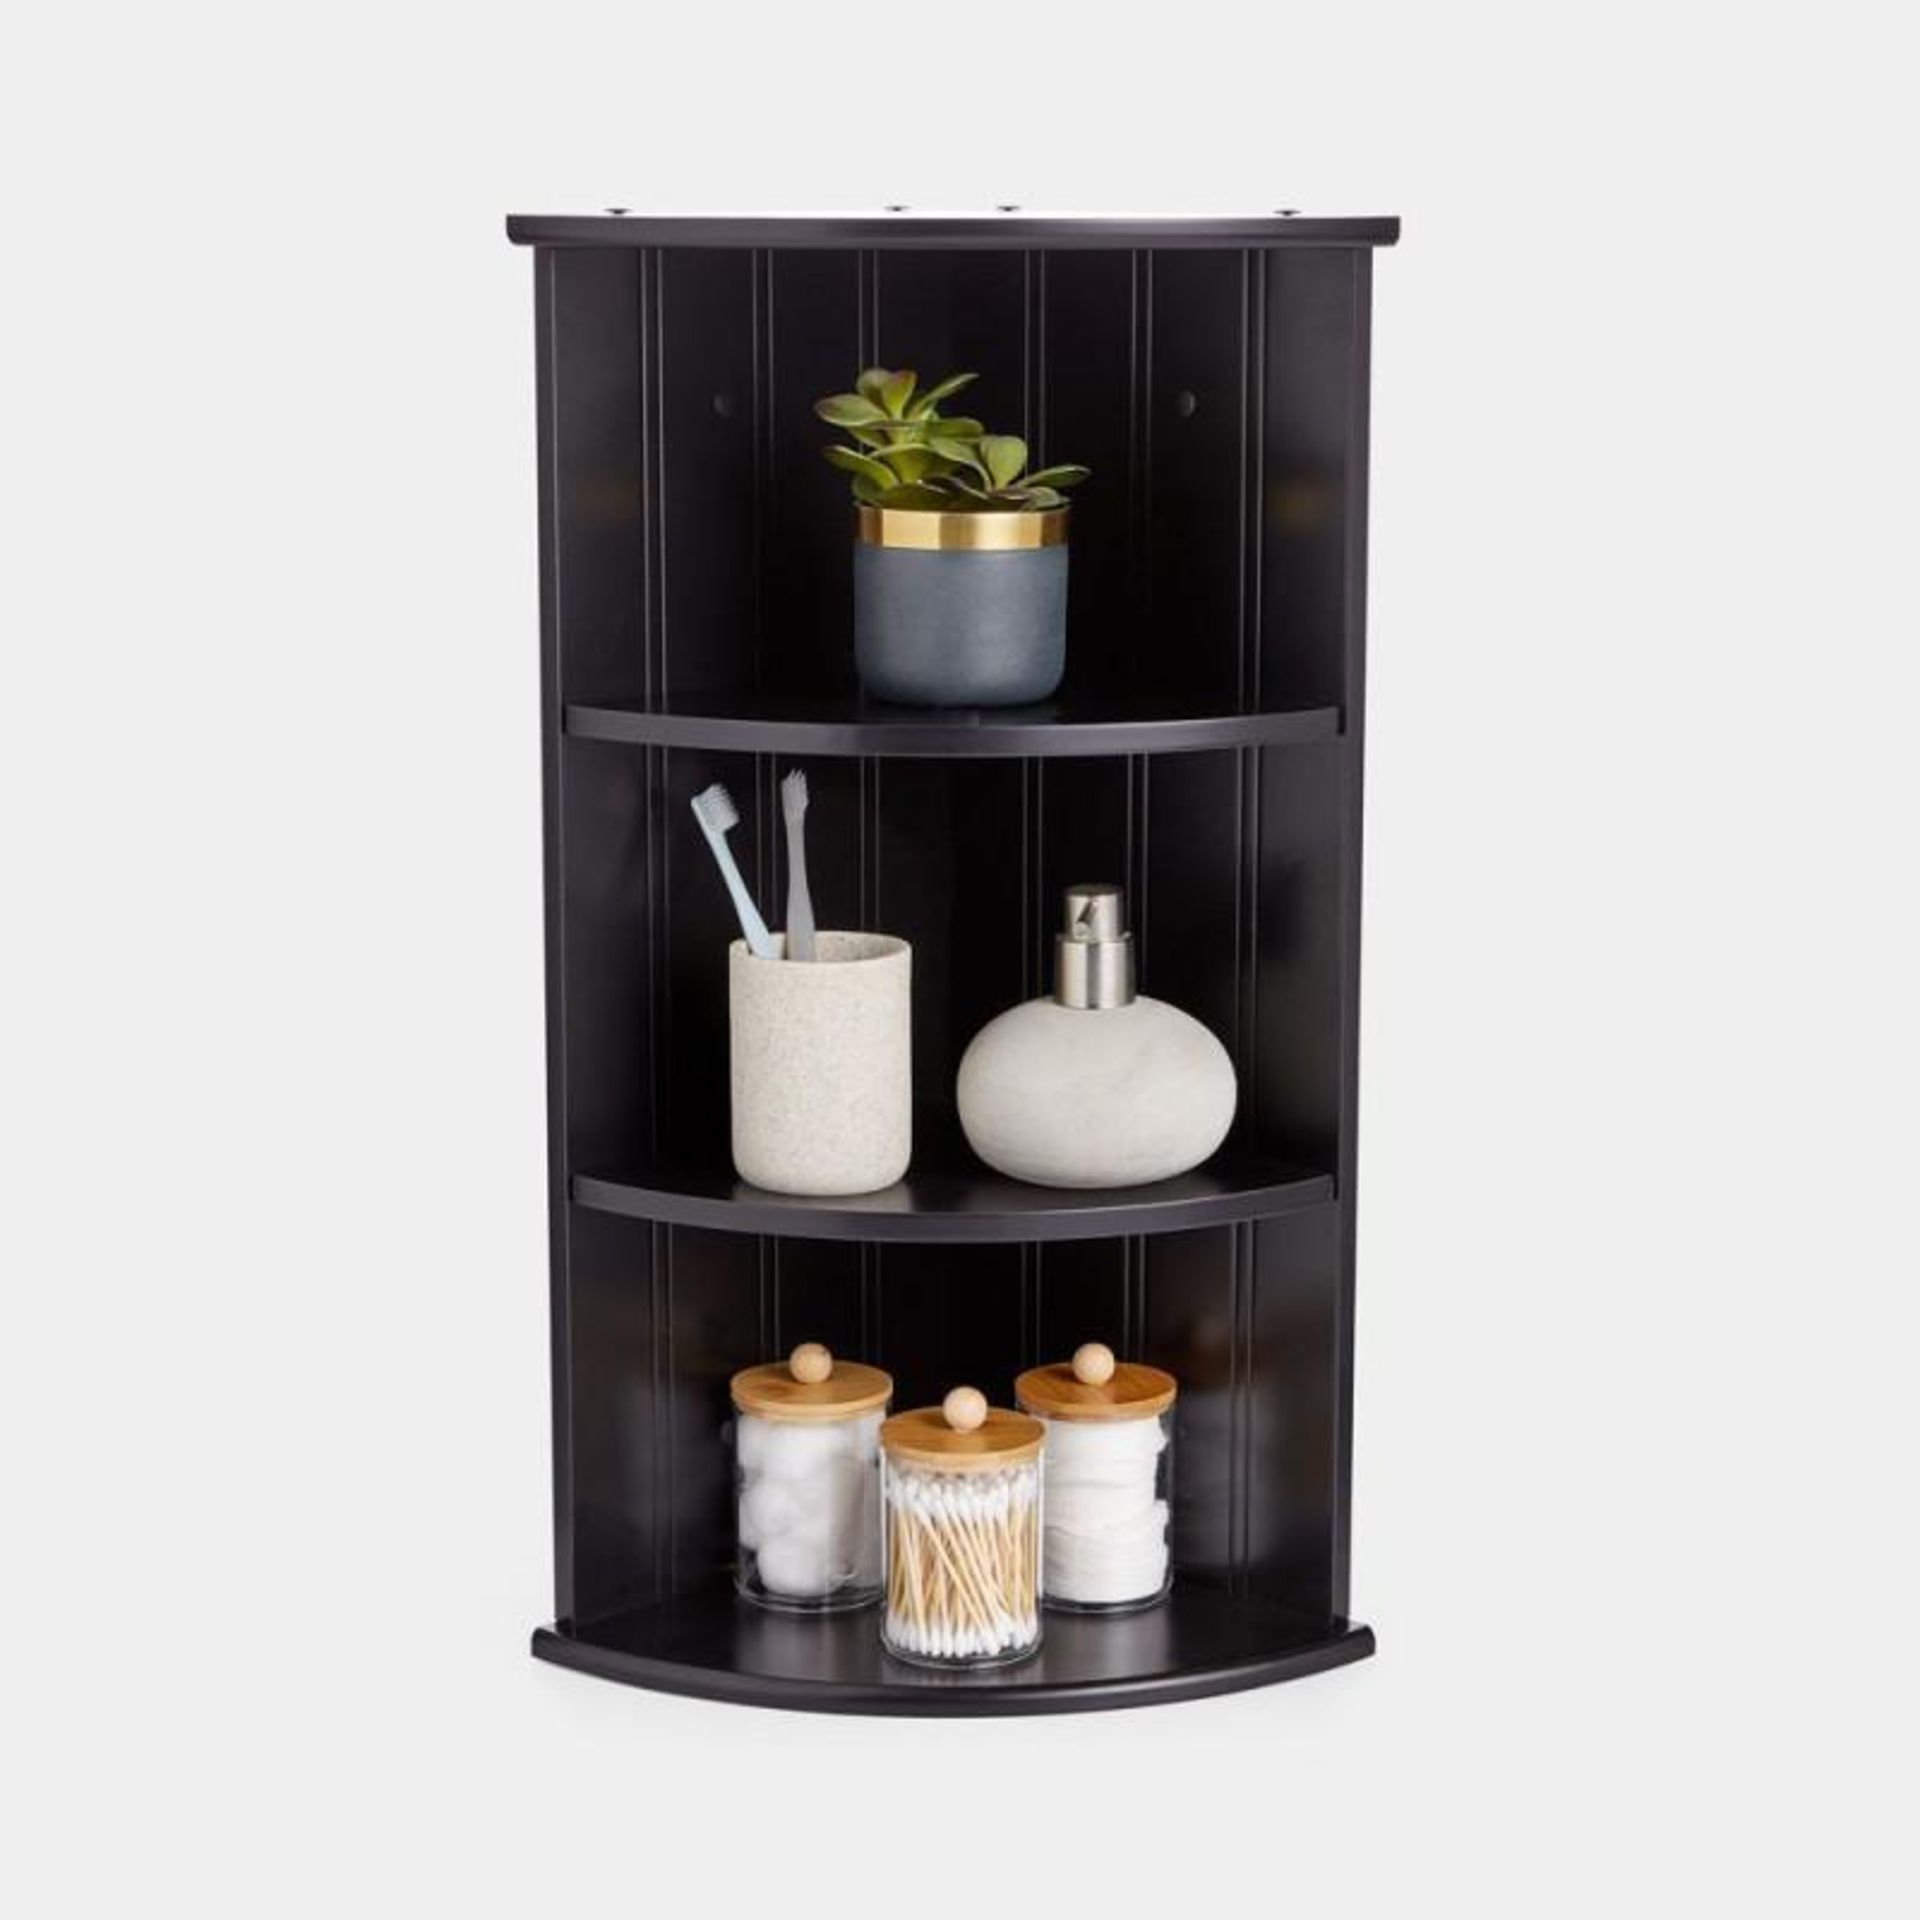 Luxury black corner shelf Shrewsbury (ER35) Add an elegant style to your bathroom with this shaker